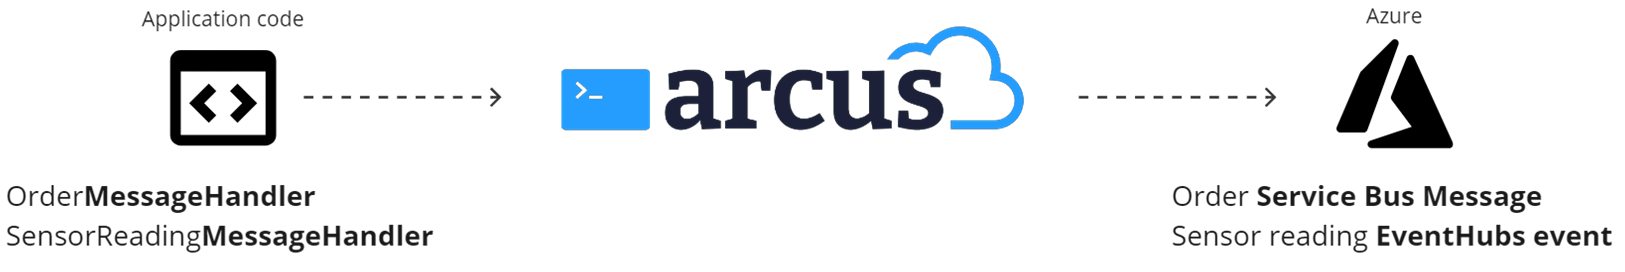 Handler - Arcus - Service Bus